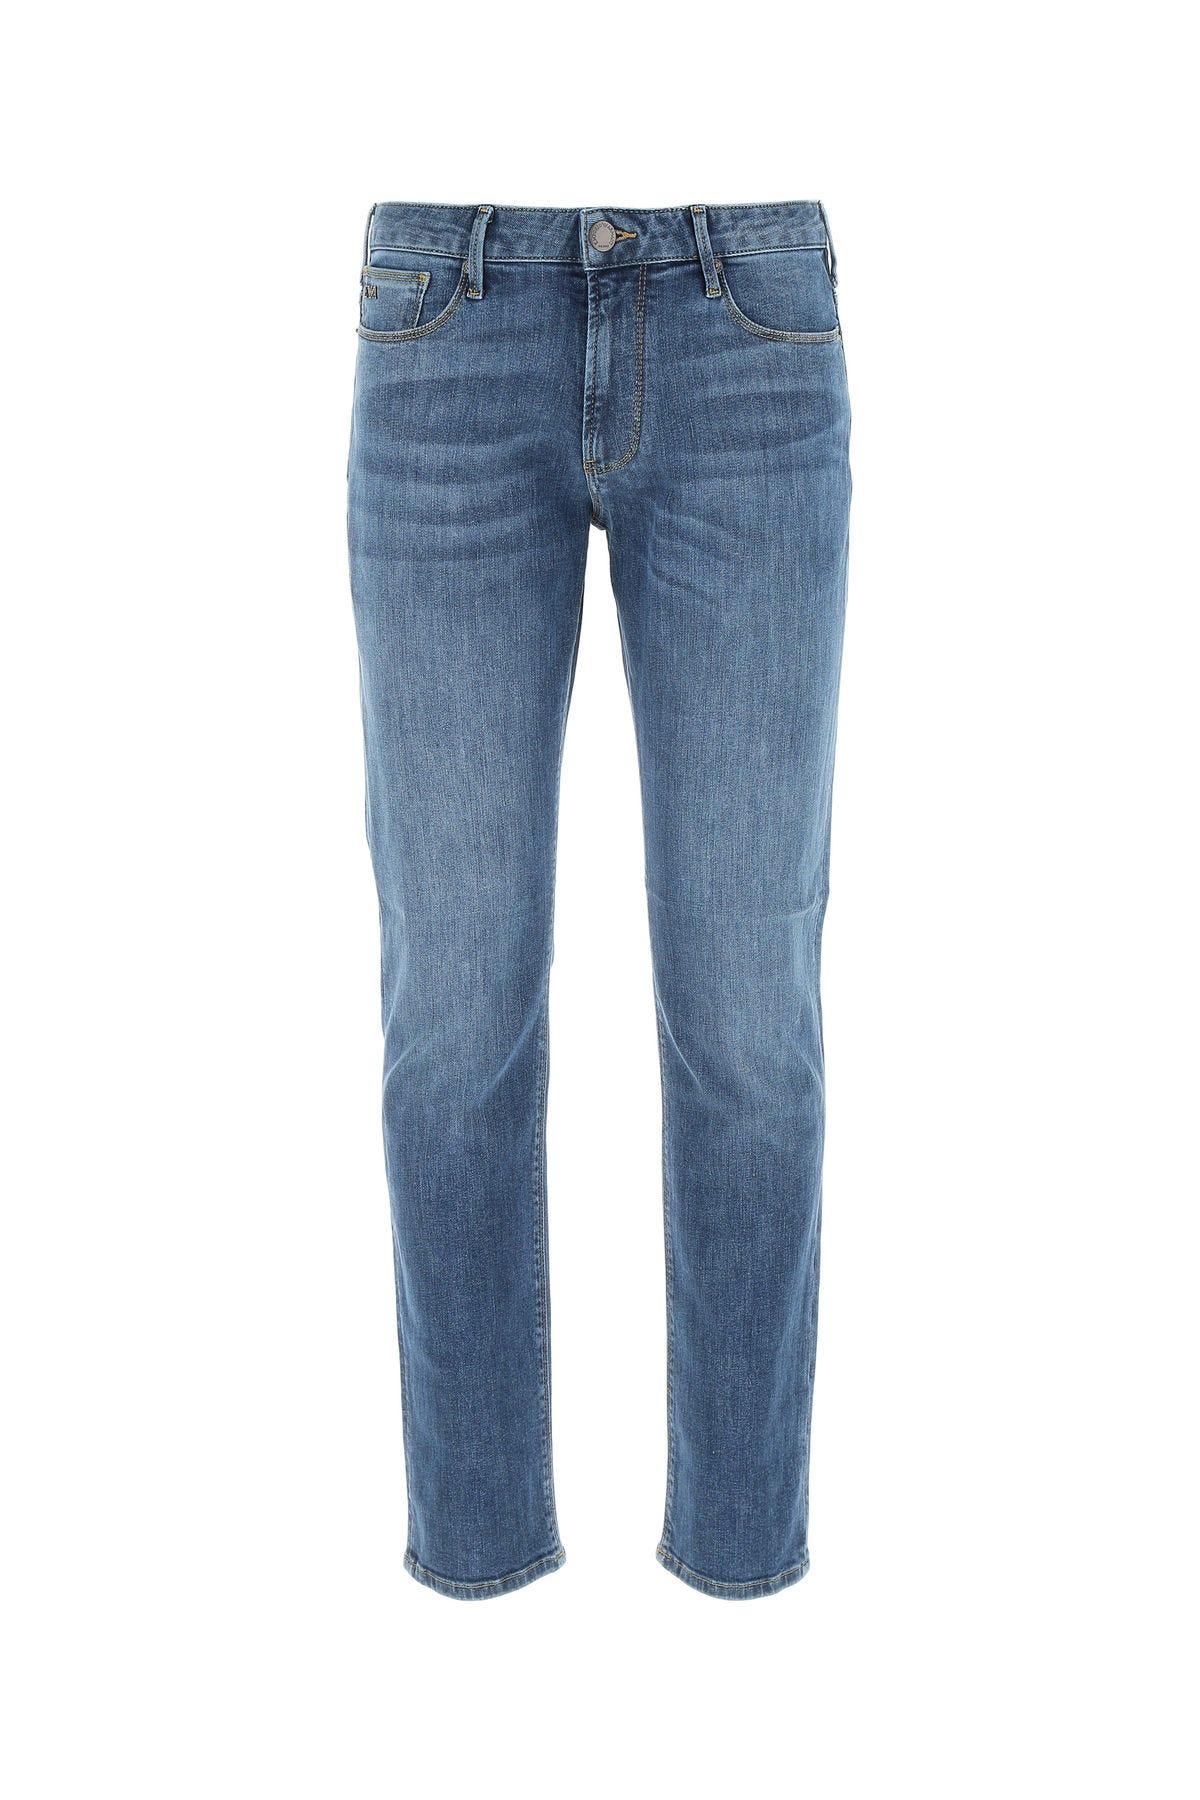 Giorgio Armani Stretch Denim Jeans